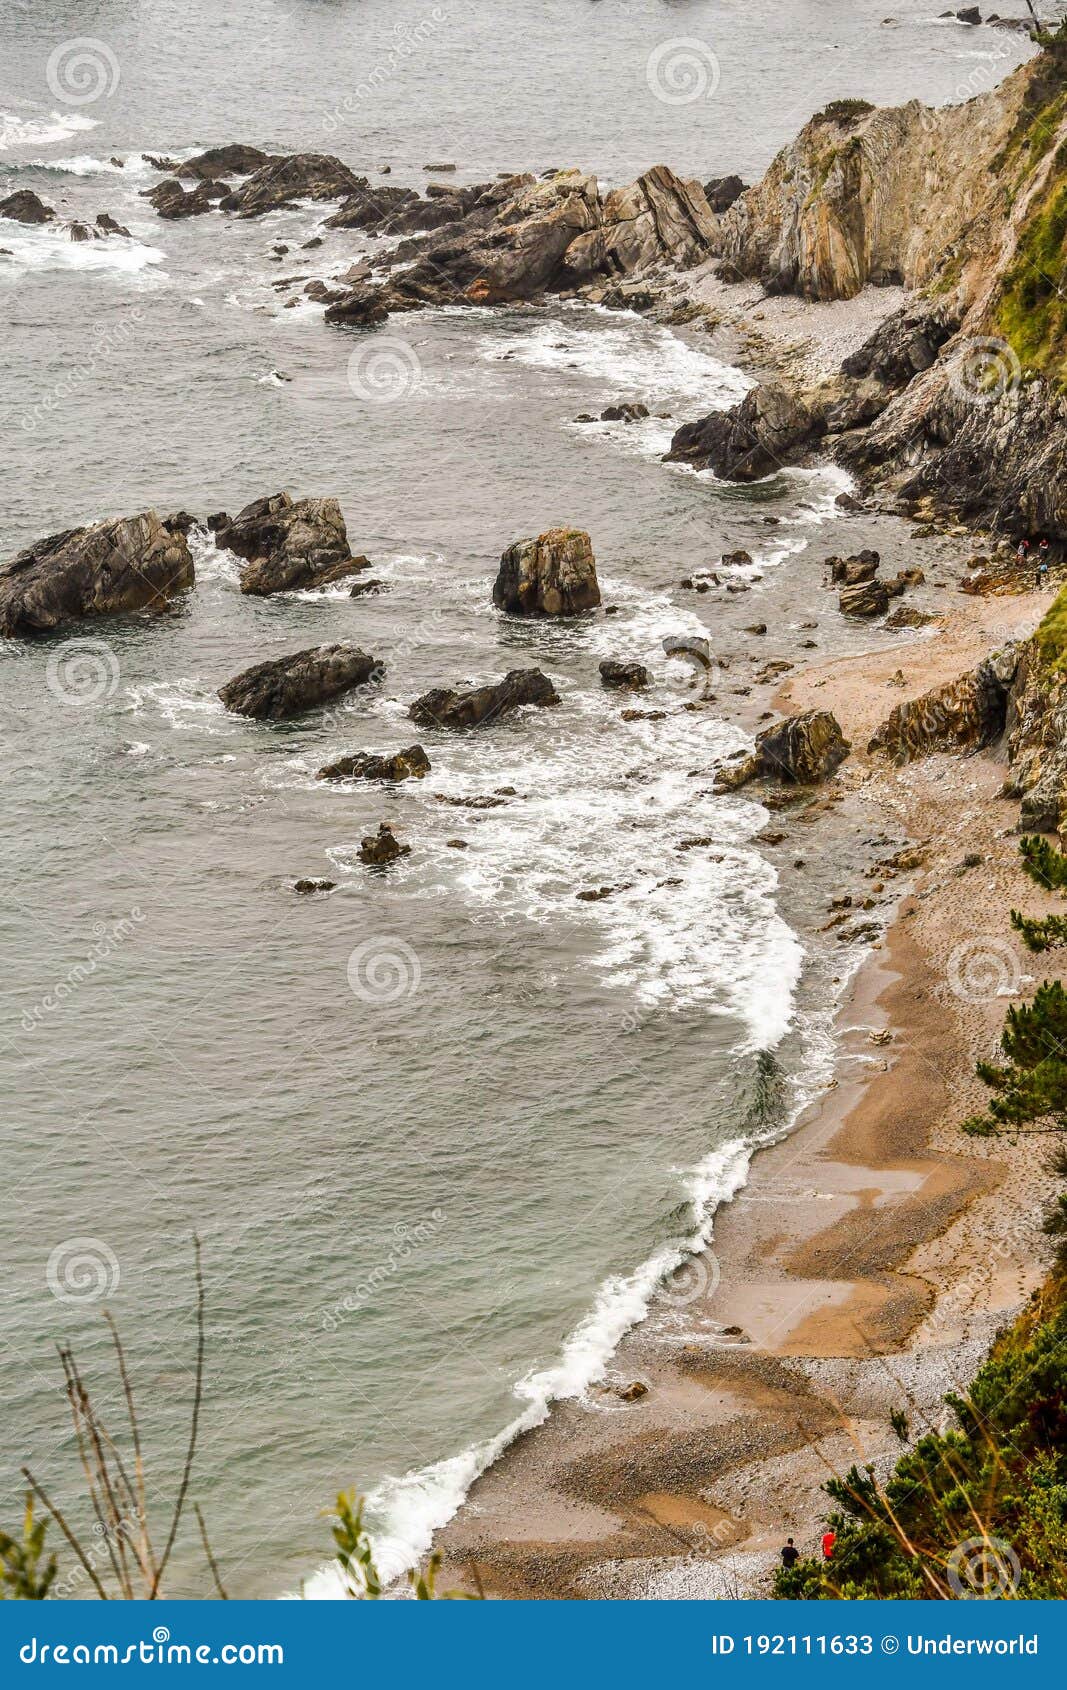 waves crashing on rocks, photo as a background , in playa del silencio , silent beach, principado de asturias, spain europe